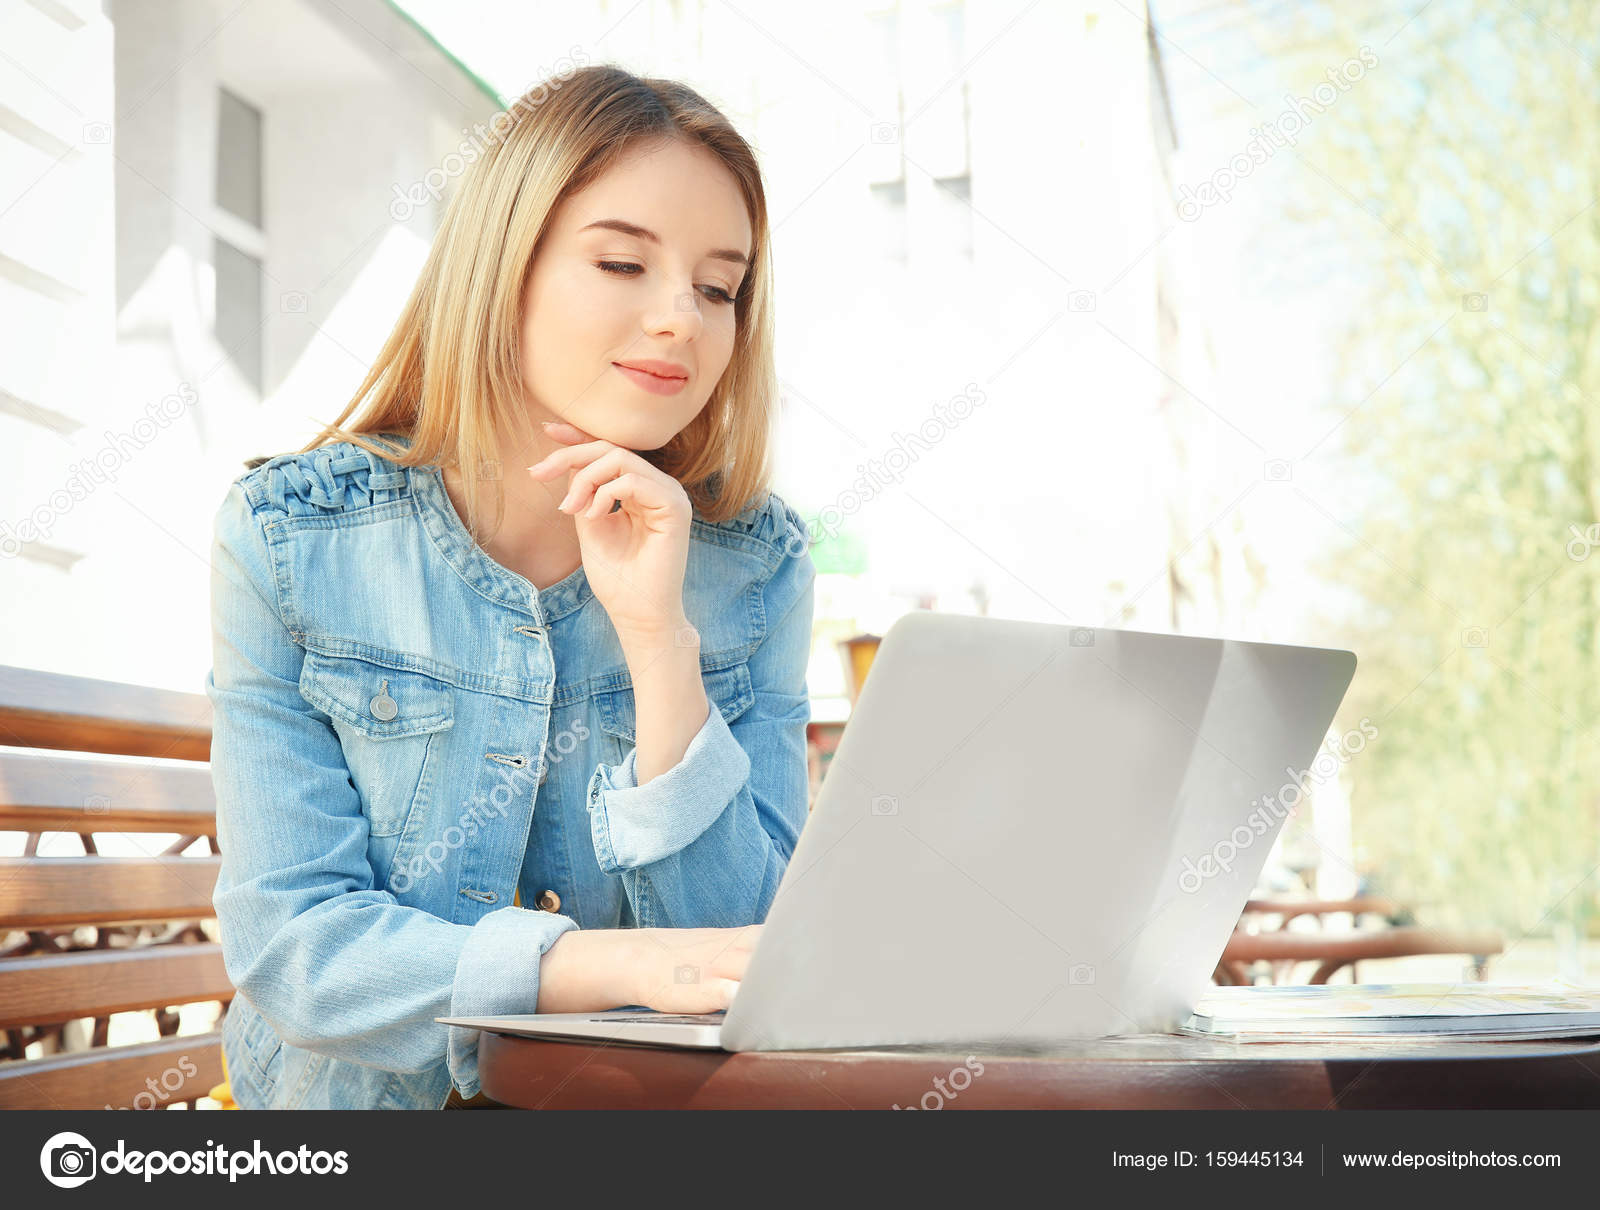 Young girl using laptop — Stock Photo © belchonock #159445134